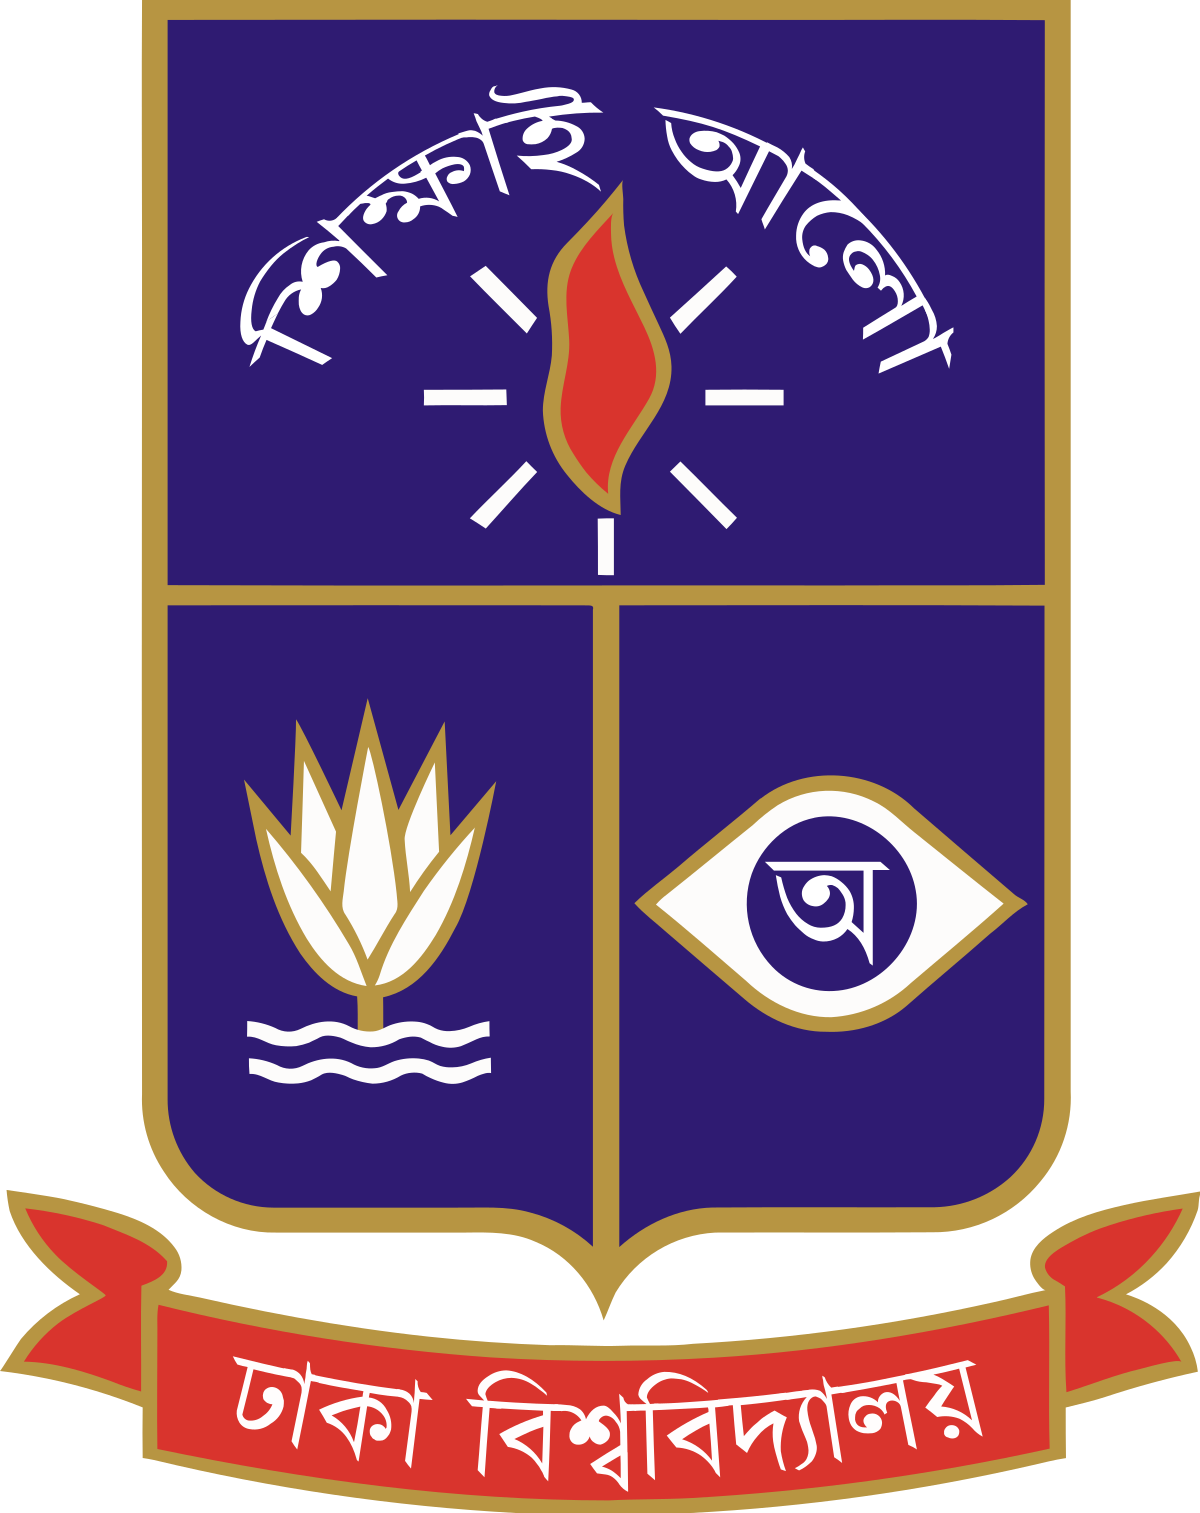 University of Dhaka flag